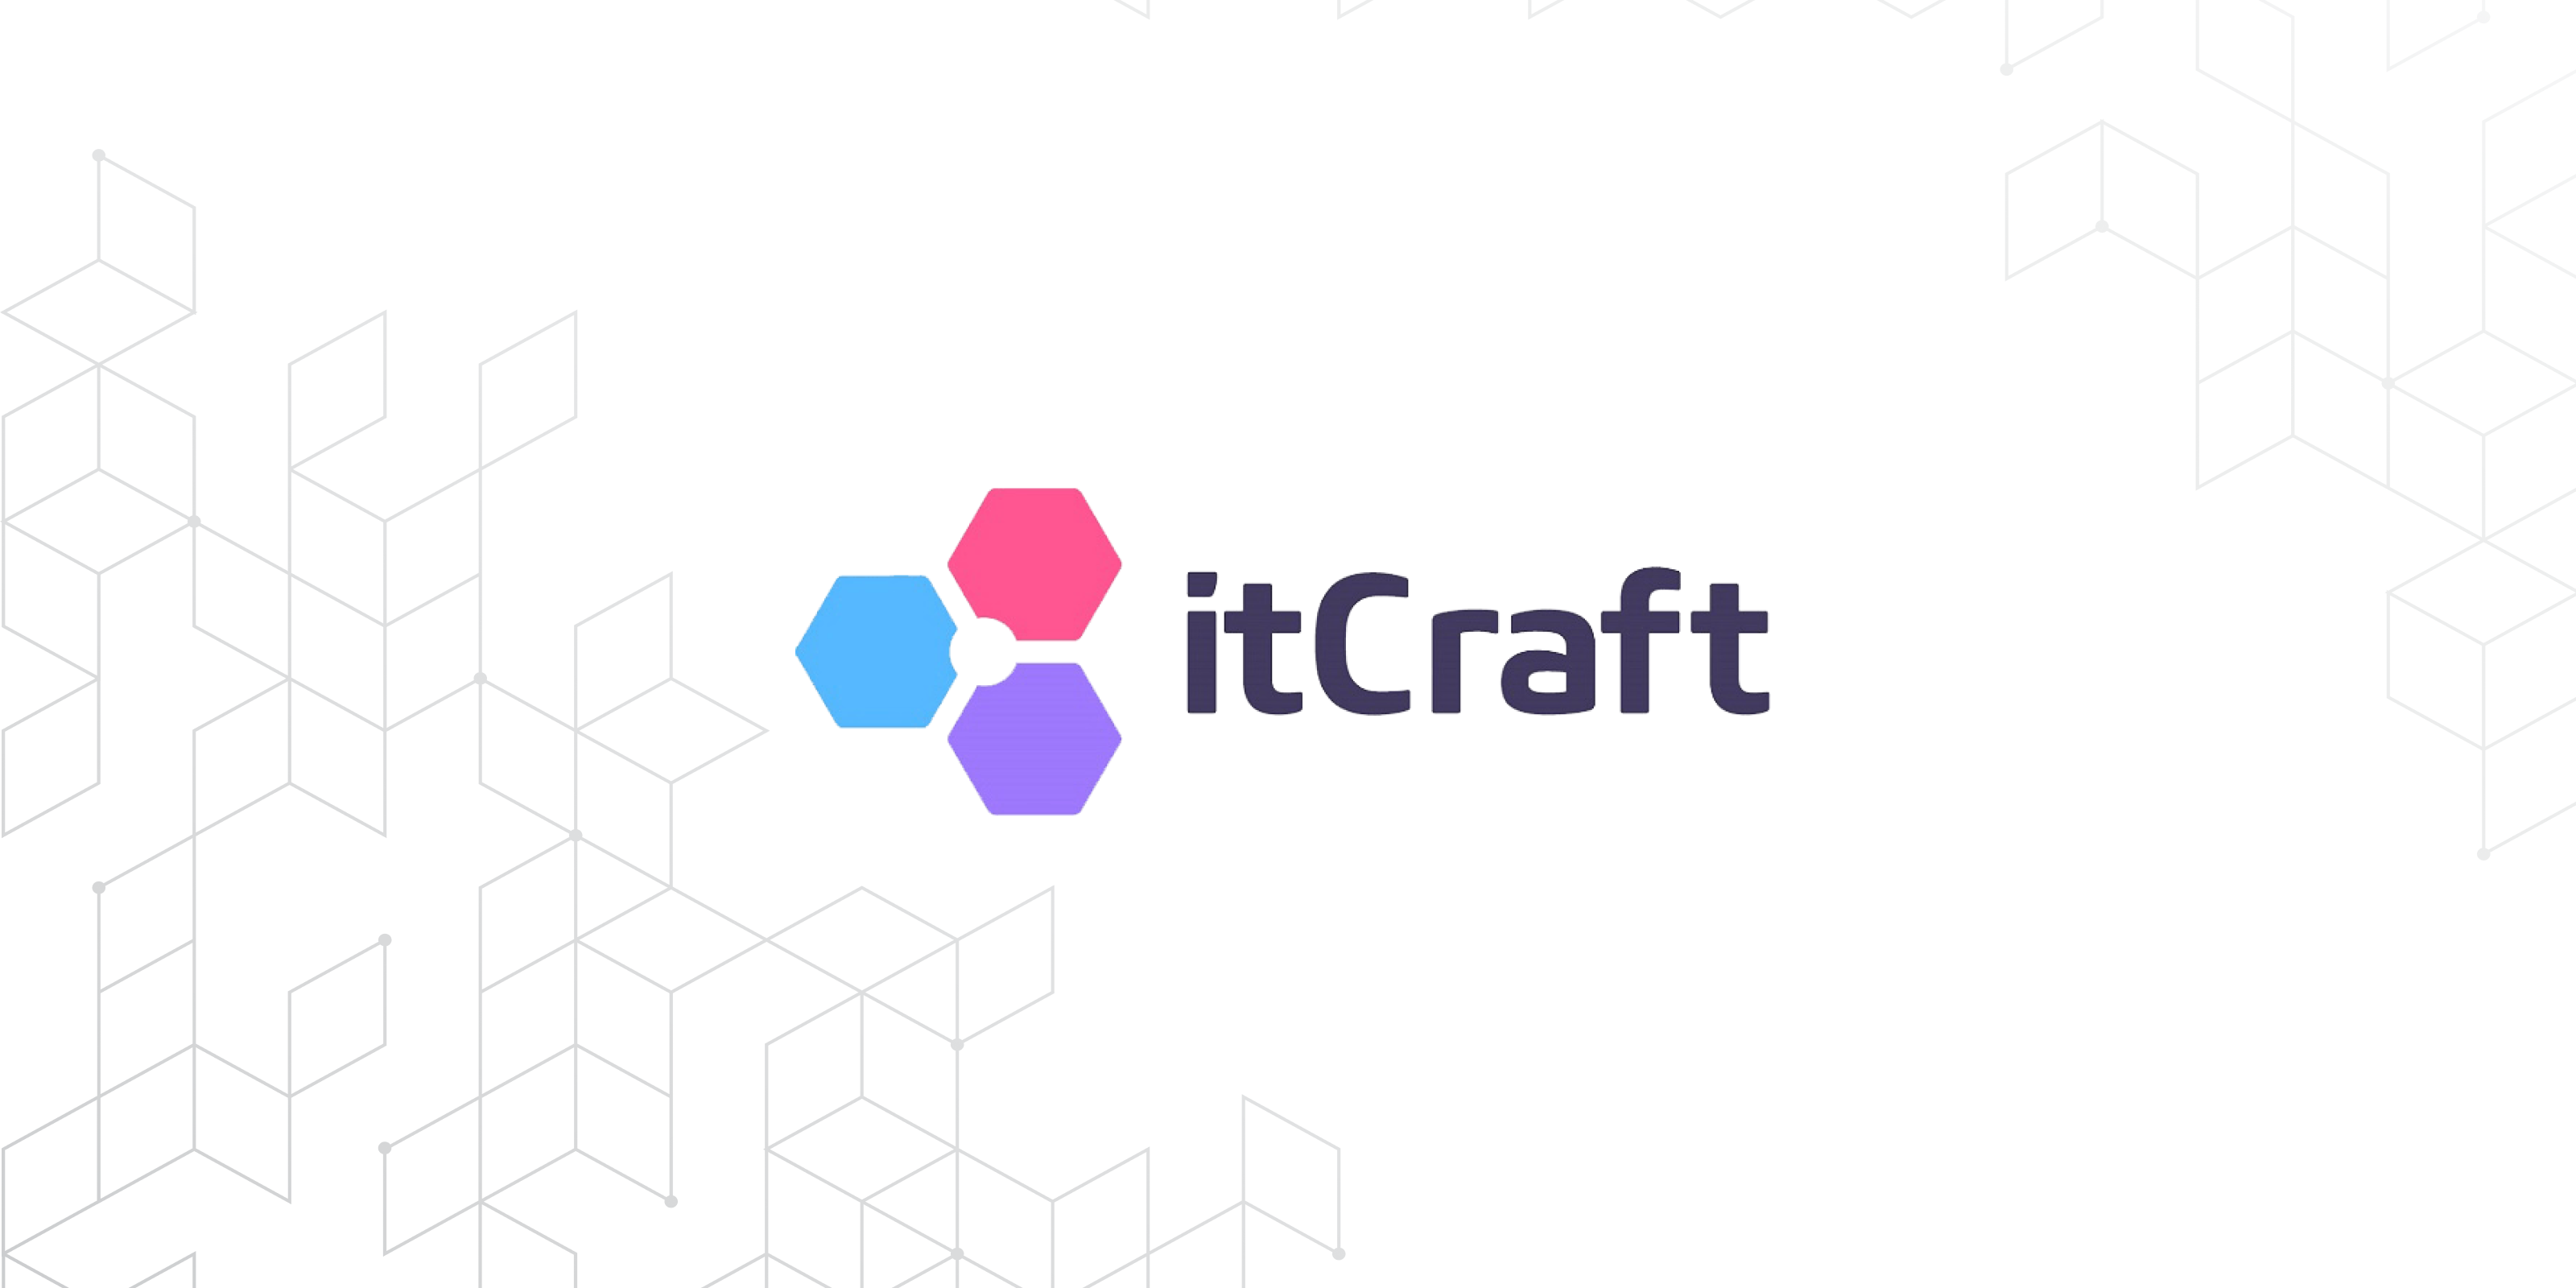 itCraft's logo